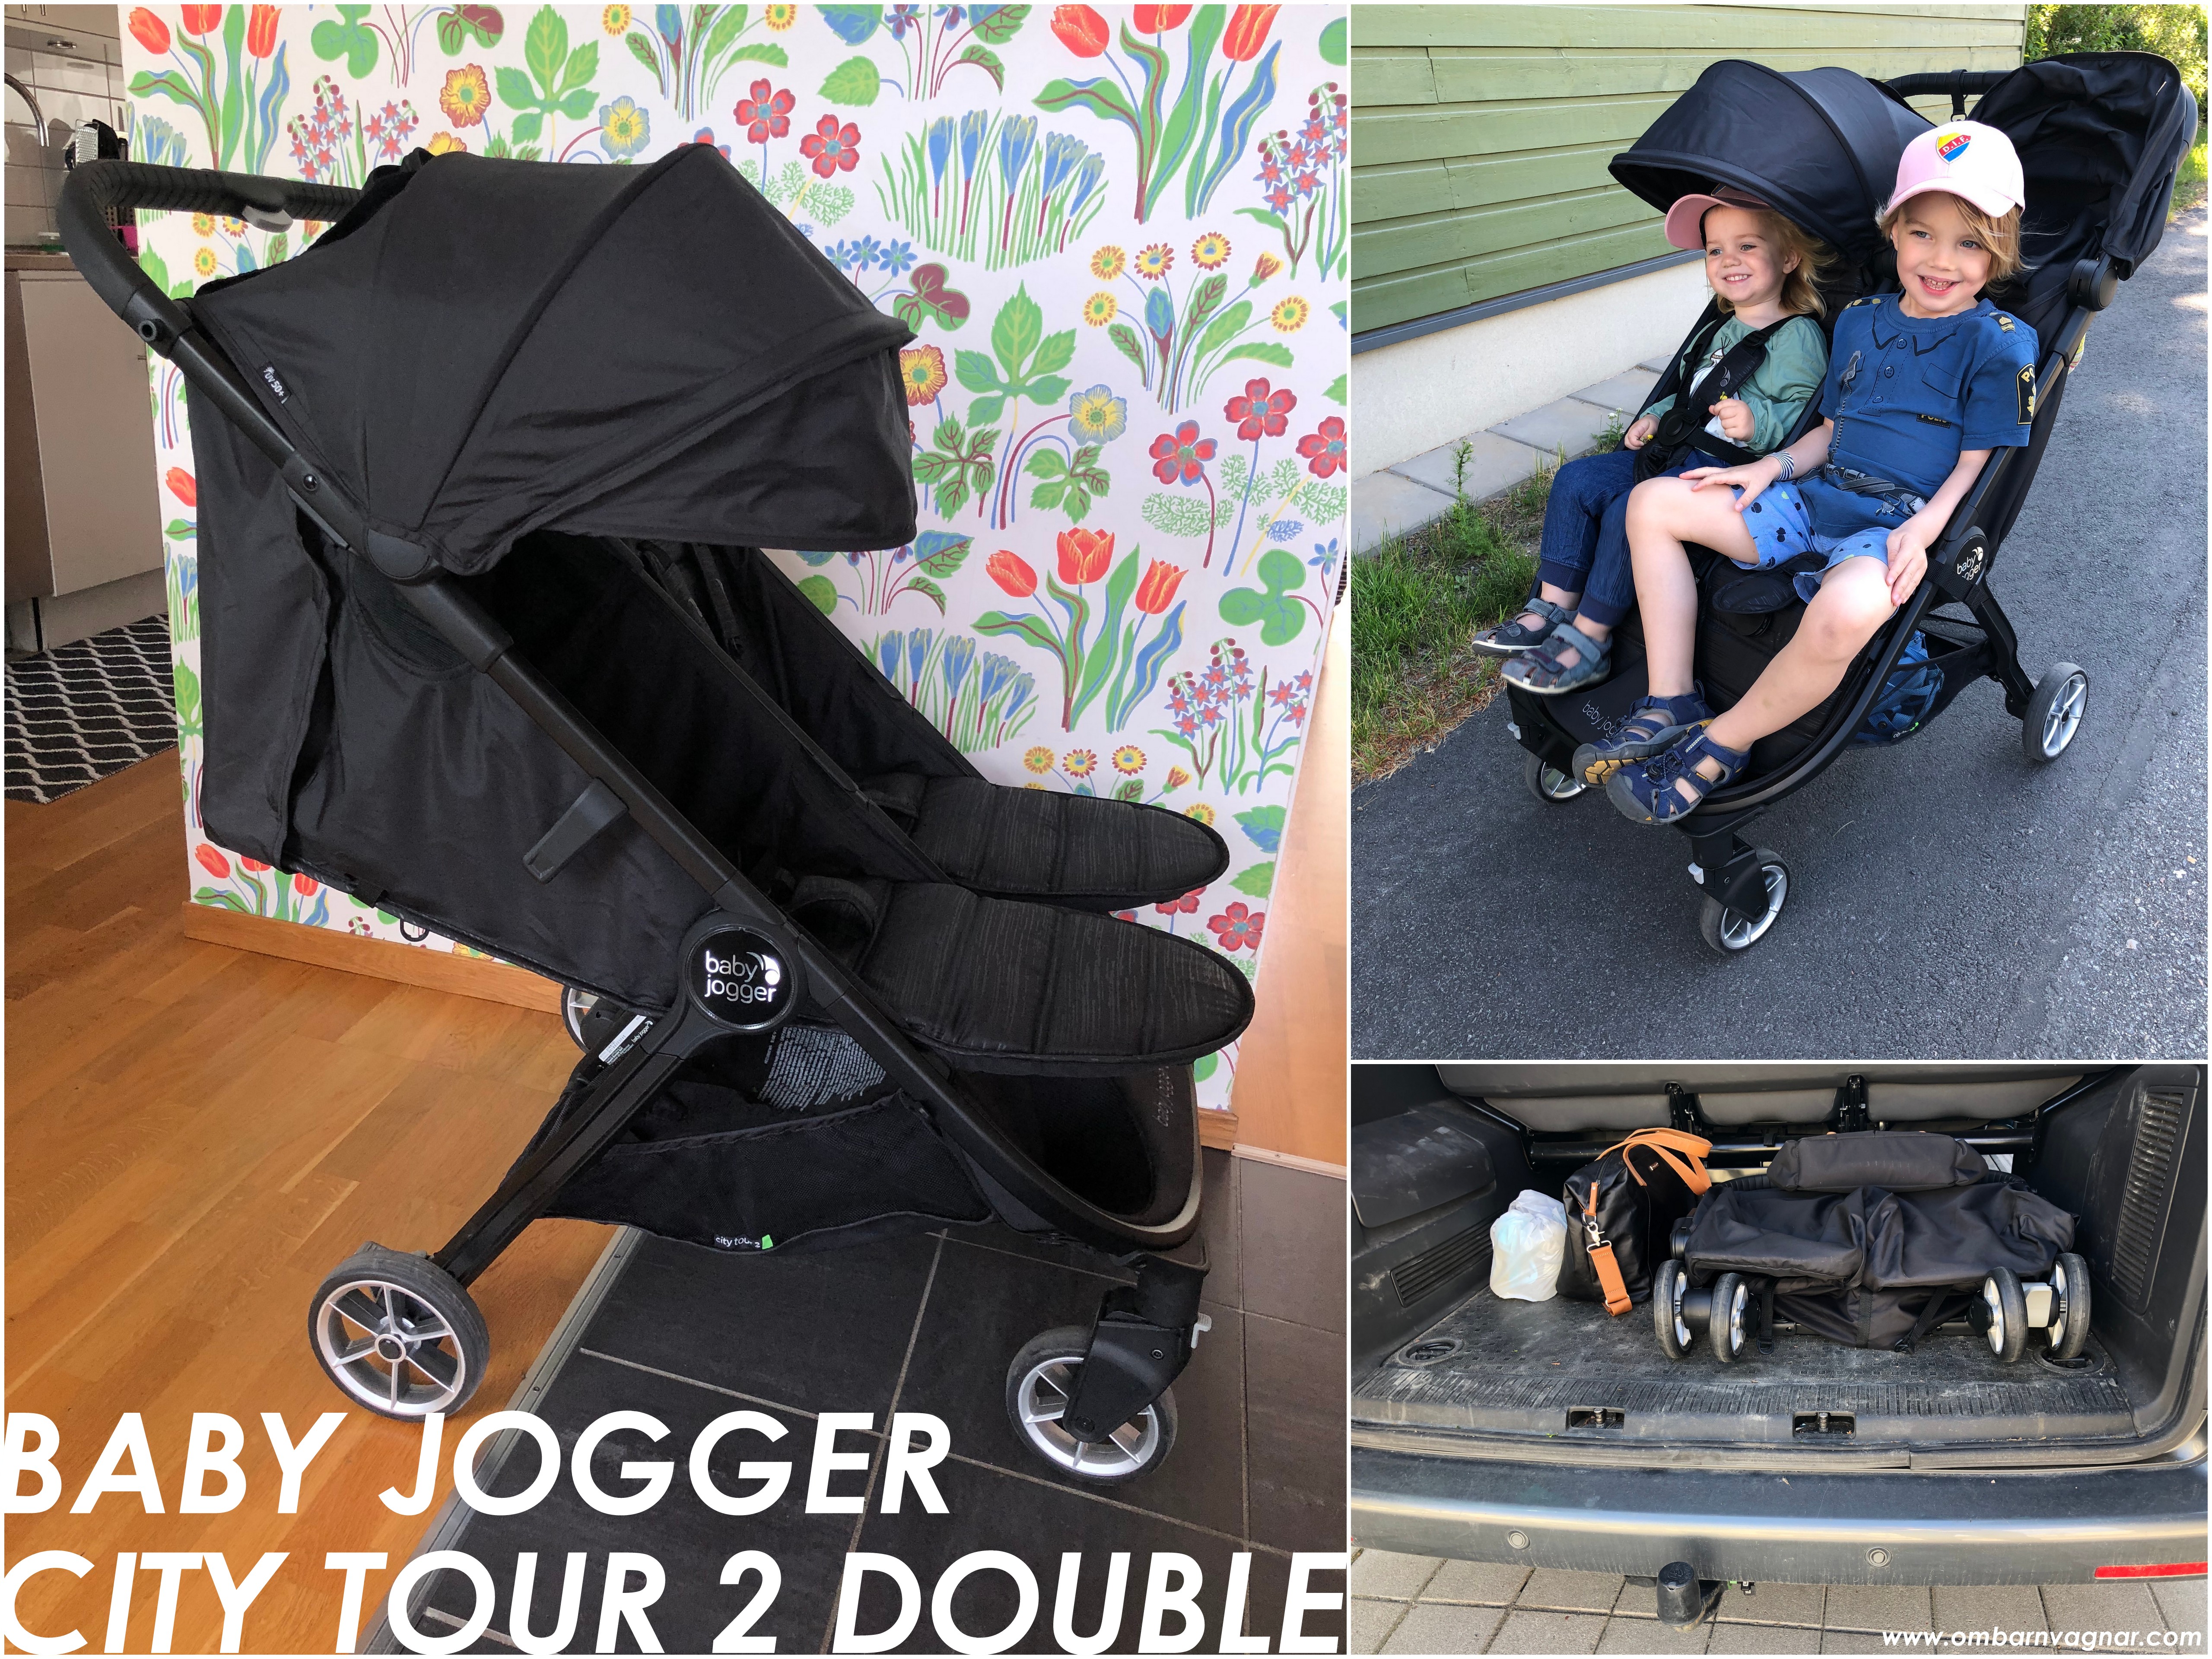 Recension av Baby Jogger City Tour 2 Double